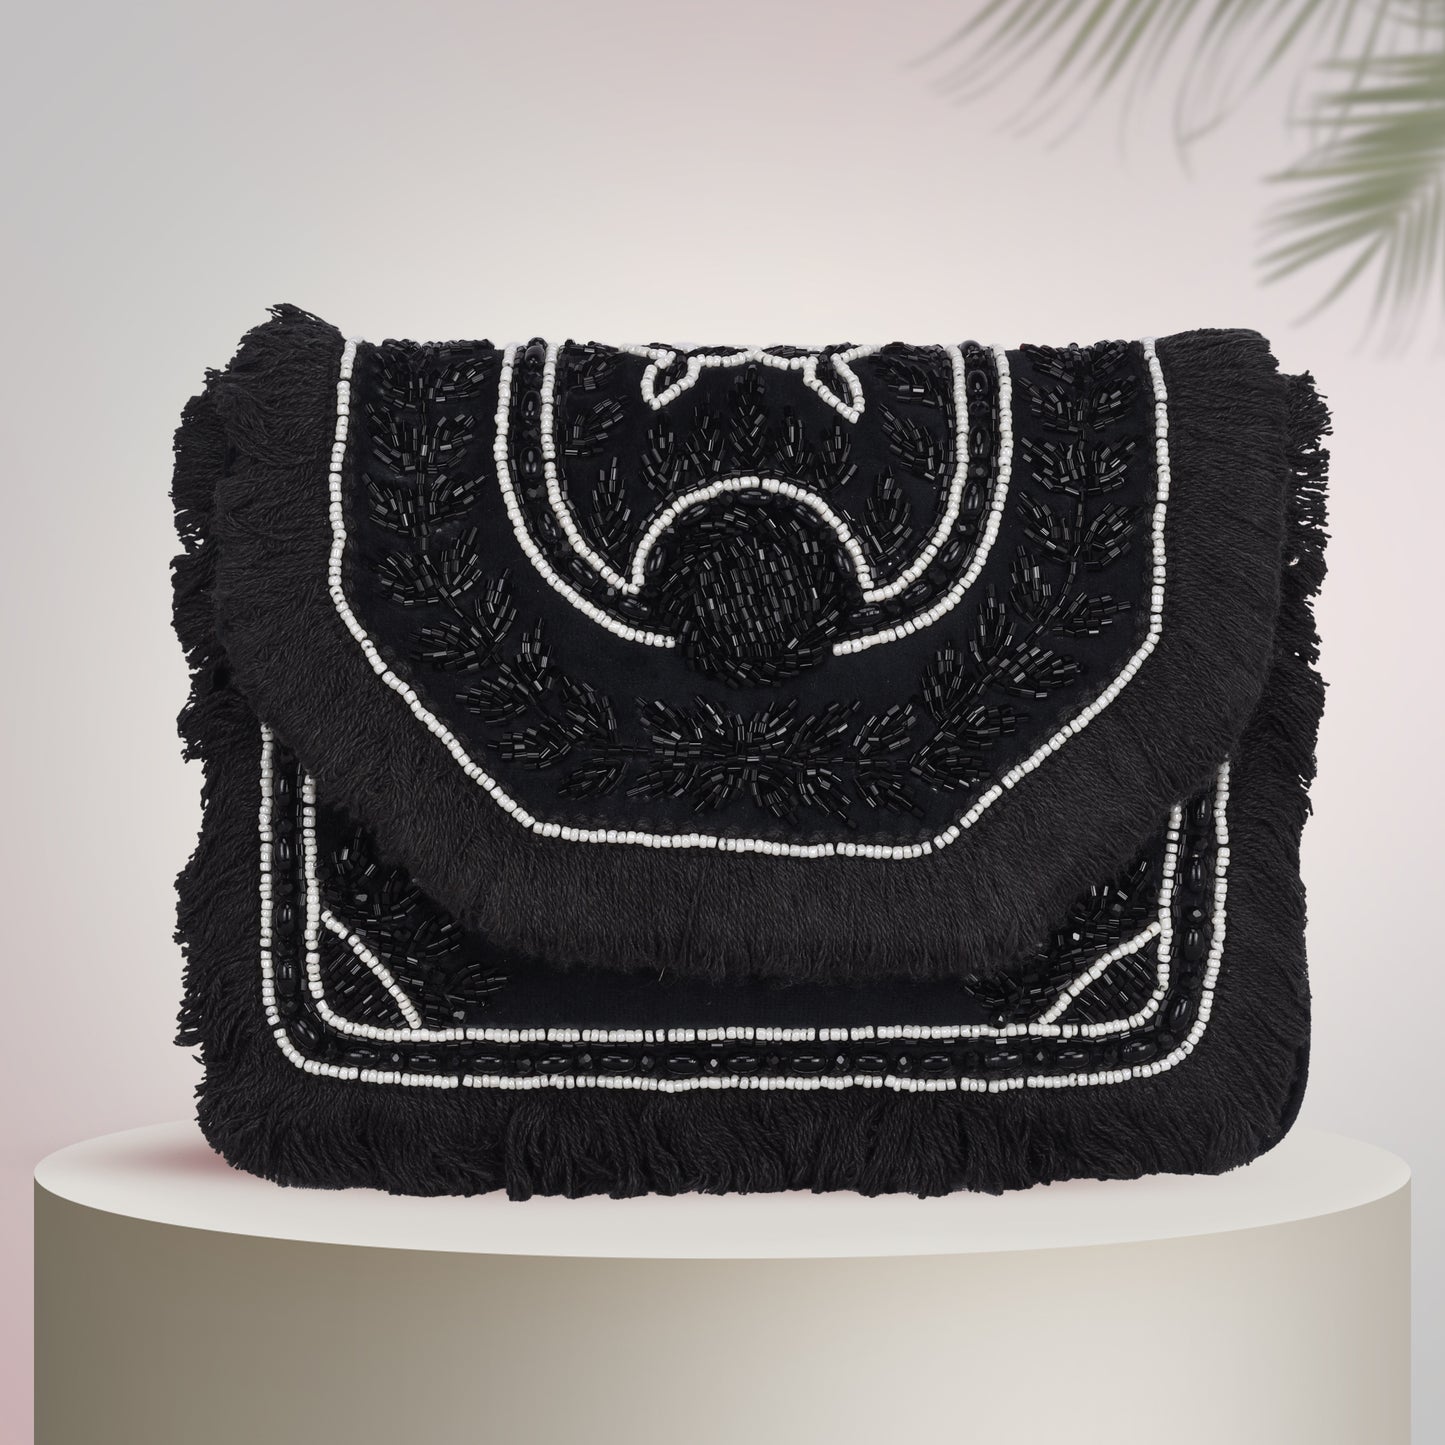 La Reat's Blossom Women's Boho Hand Embroidery Clutch Bag in Black